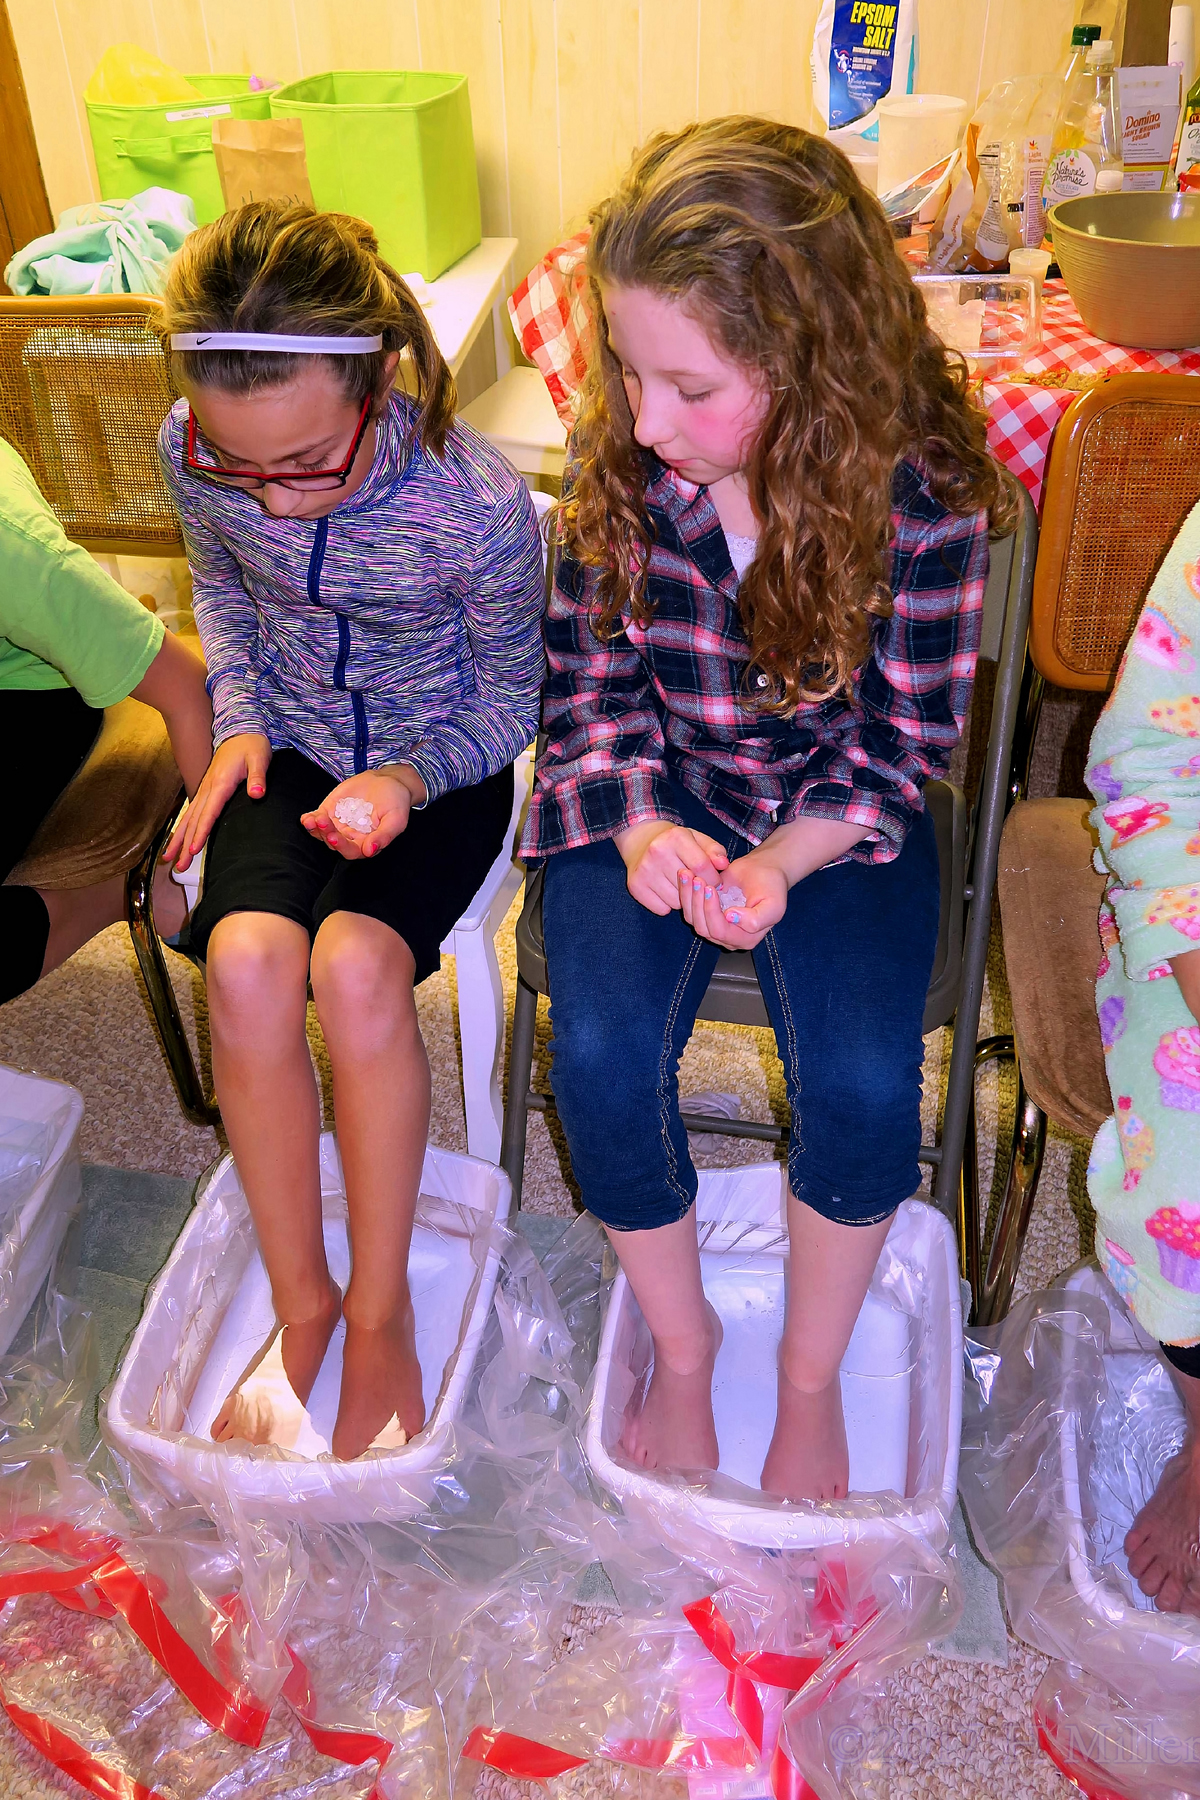 Putting The Salt In Their Footbaths During Kids Pedis. 1